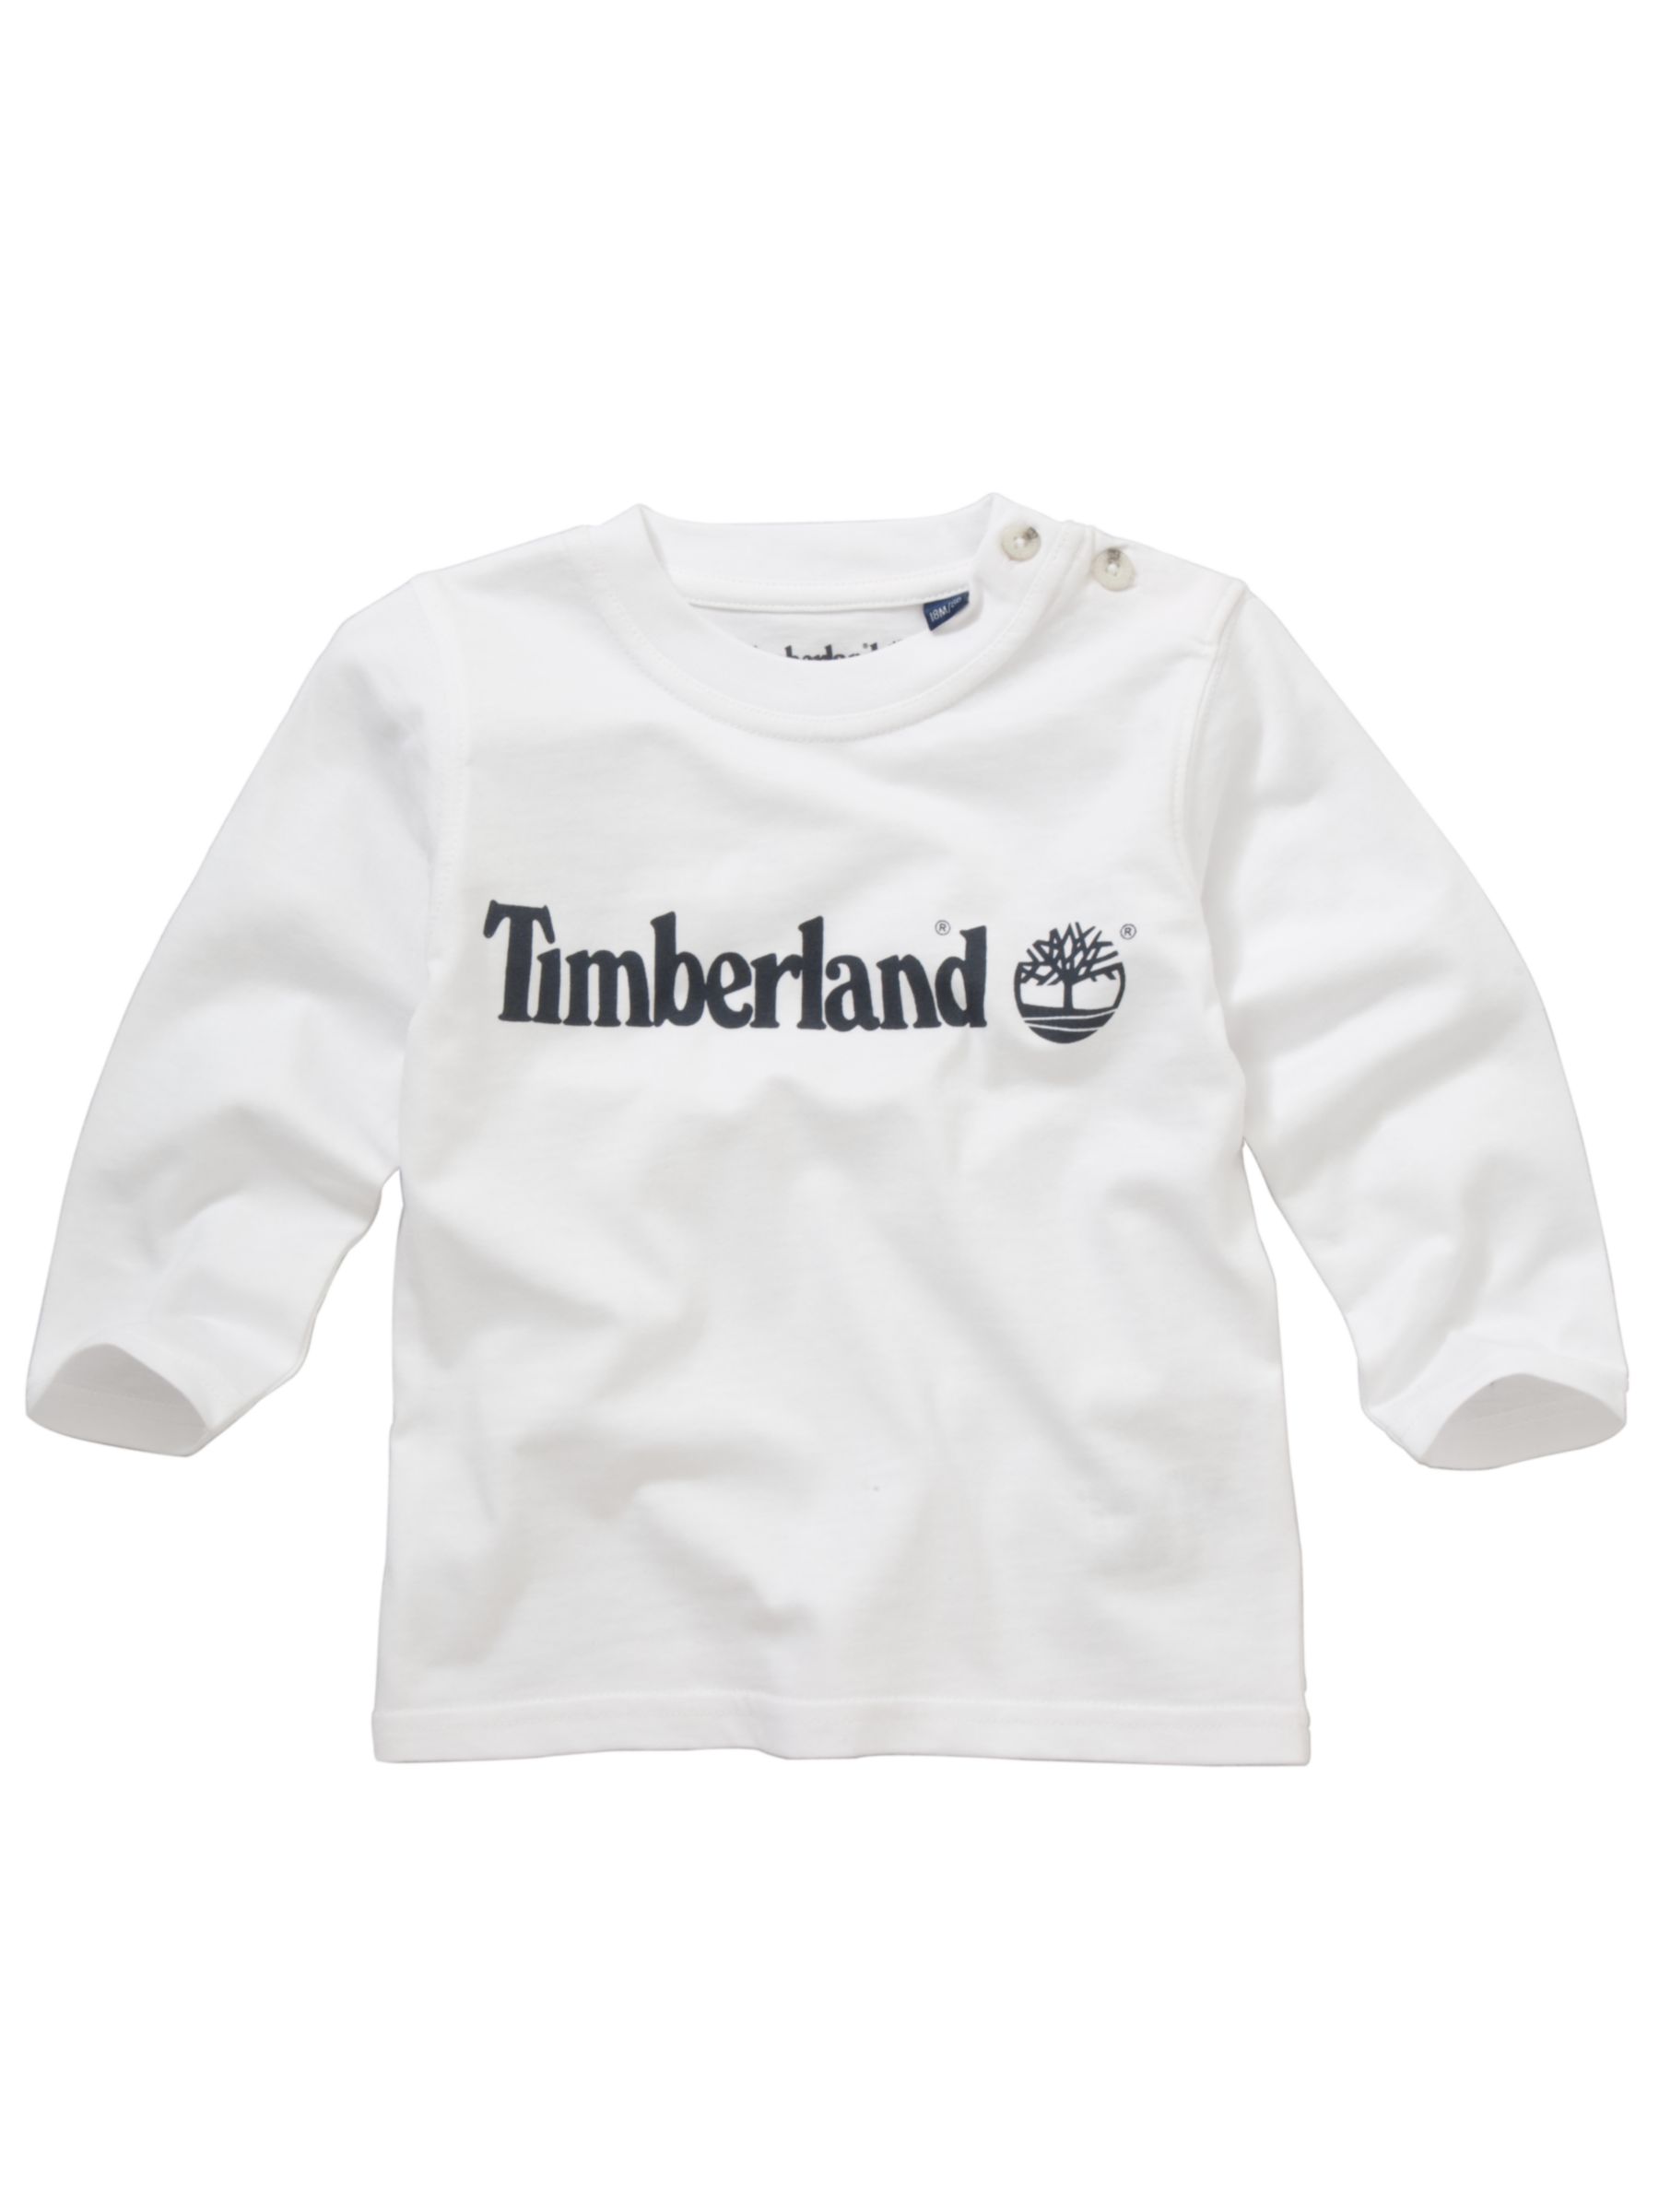 Timberland Long Sleeve Logo T-Shirt, White